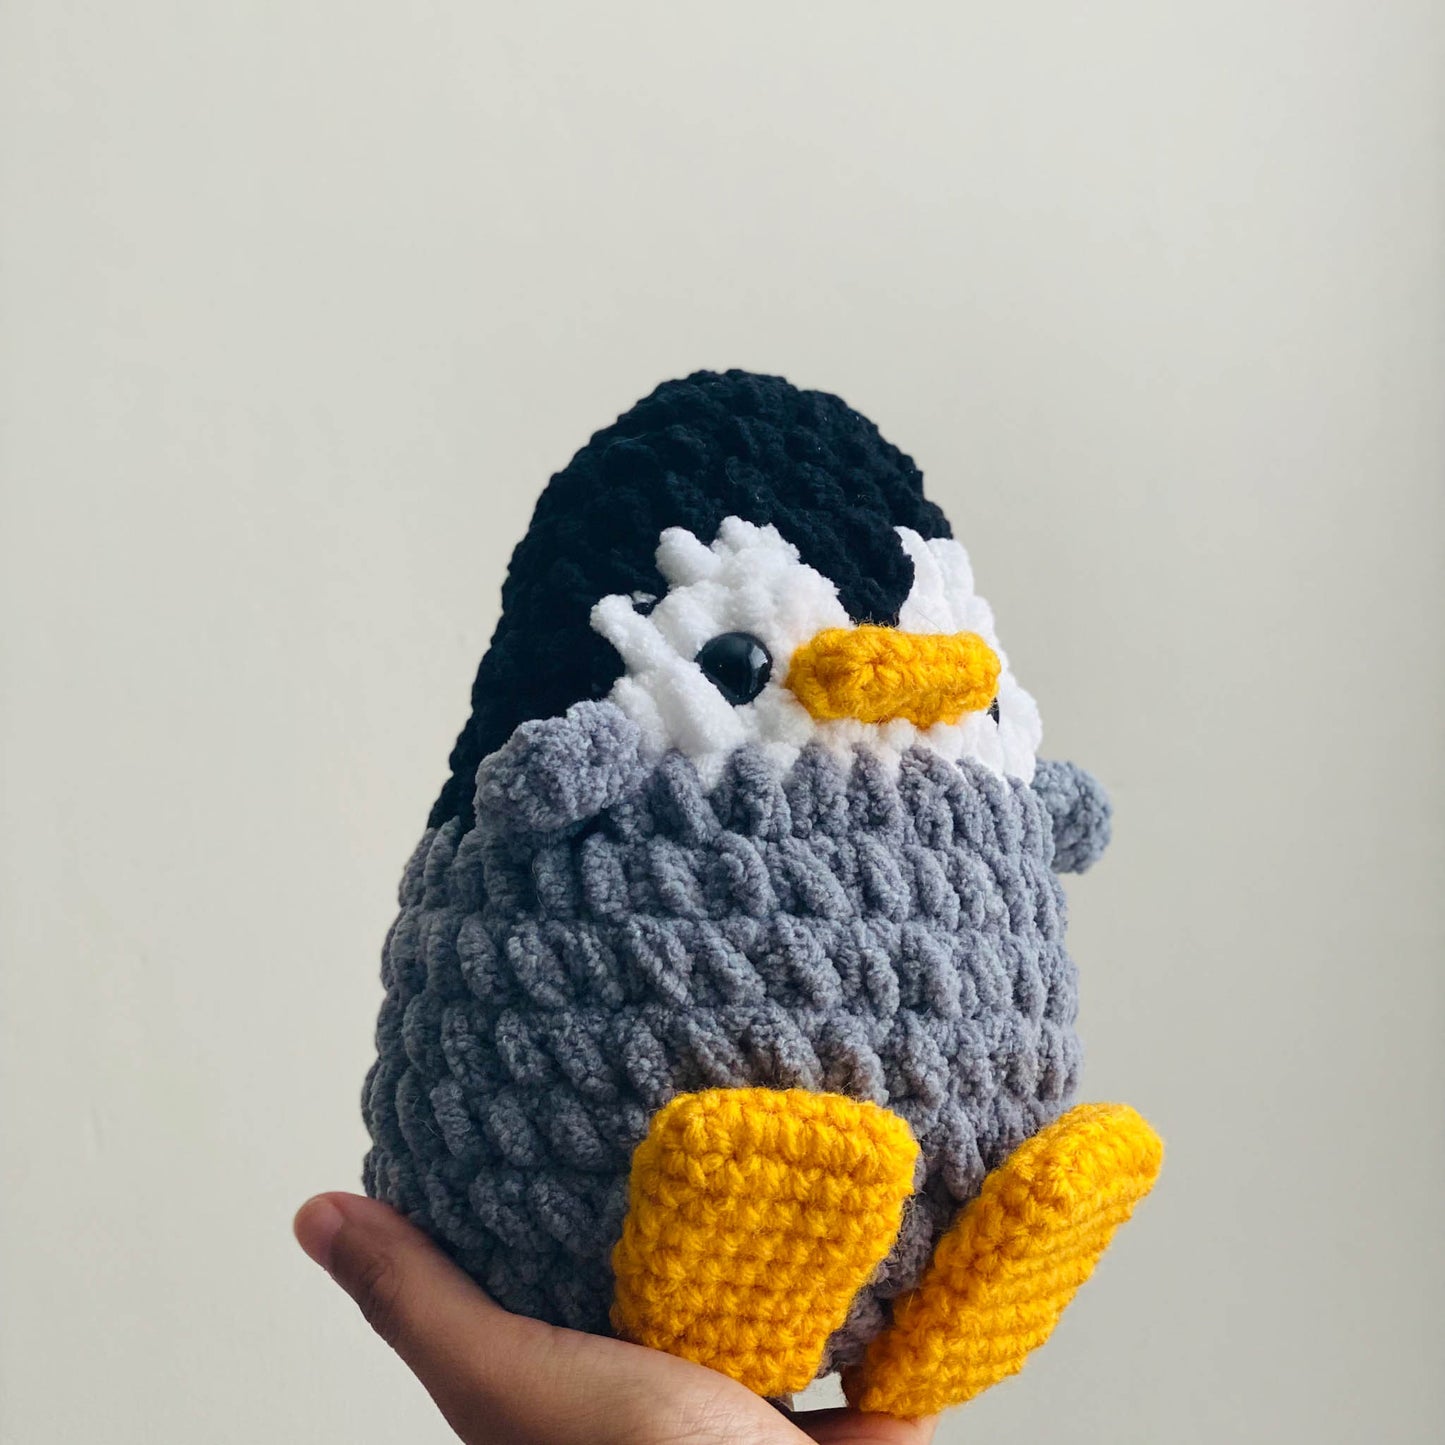 Crochet Black and Gray Penguin Stuffed Animal